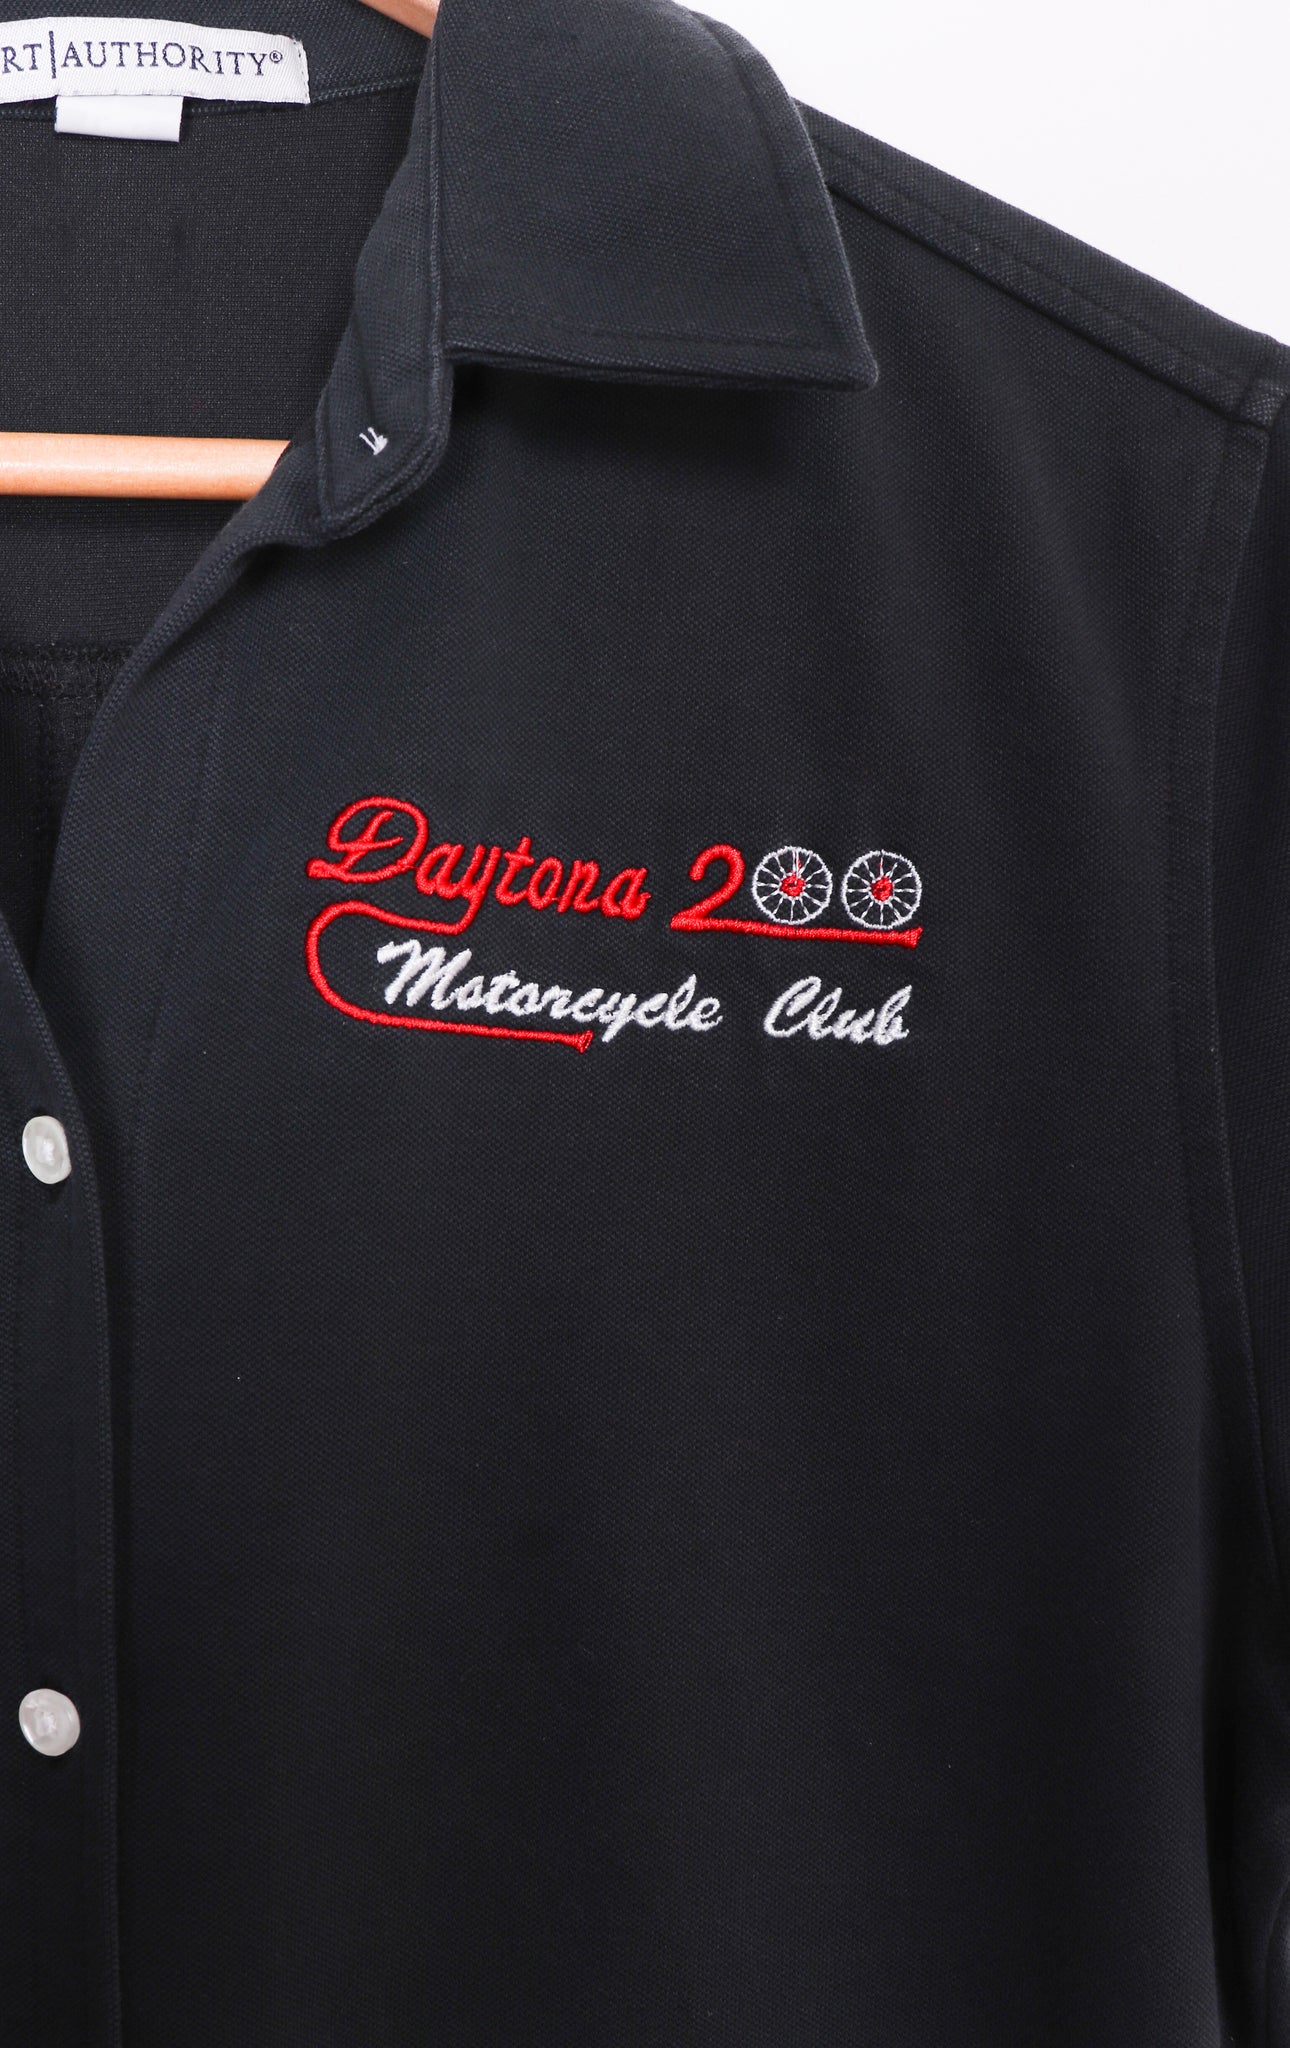 Daytona 200 Motorcycle Club Women's Collared Top